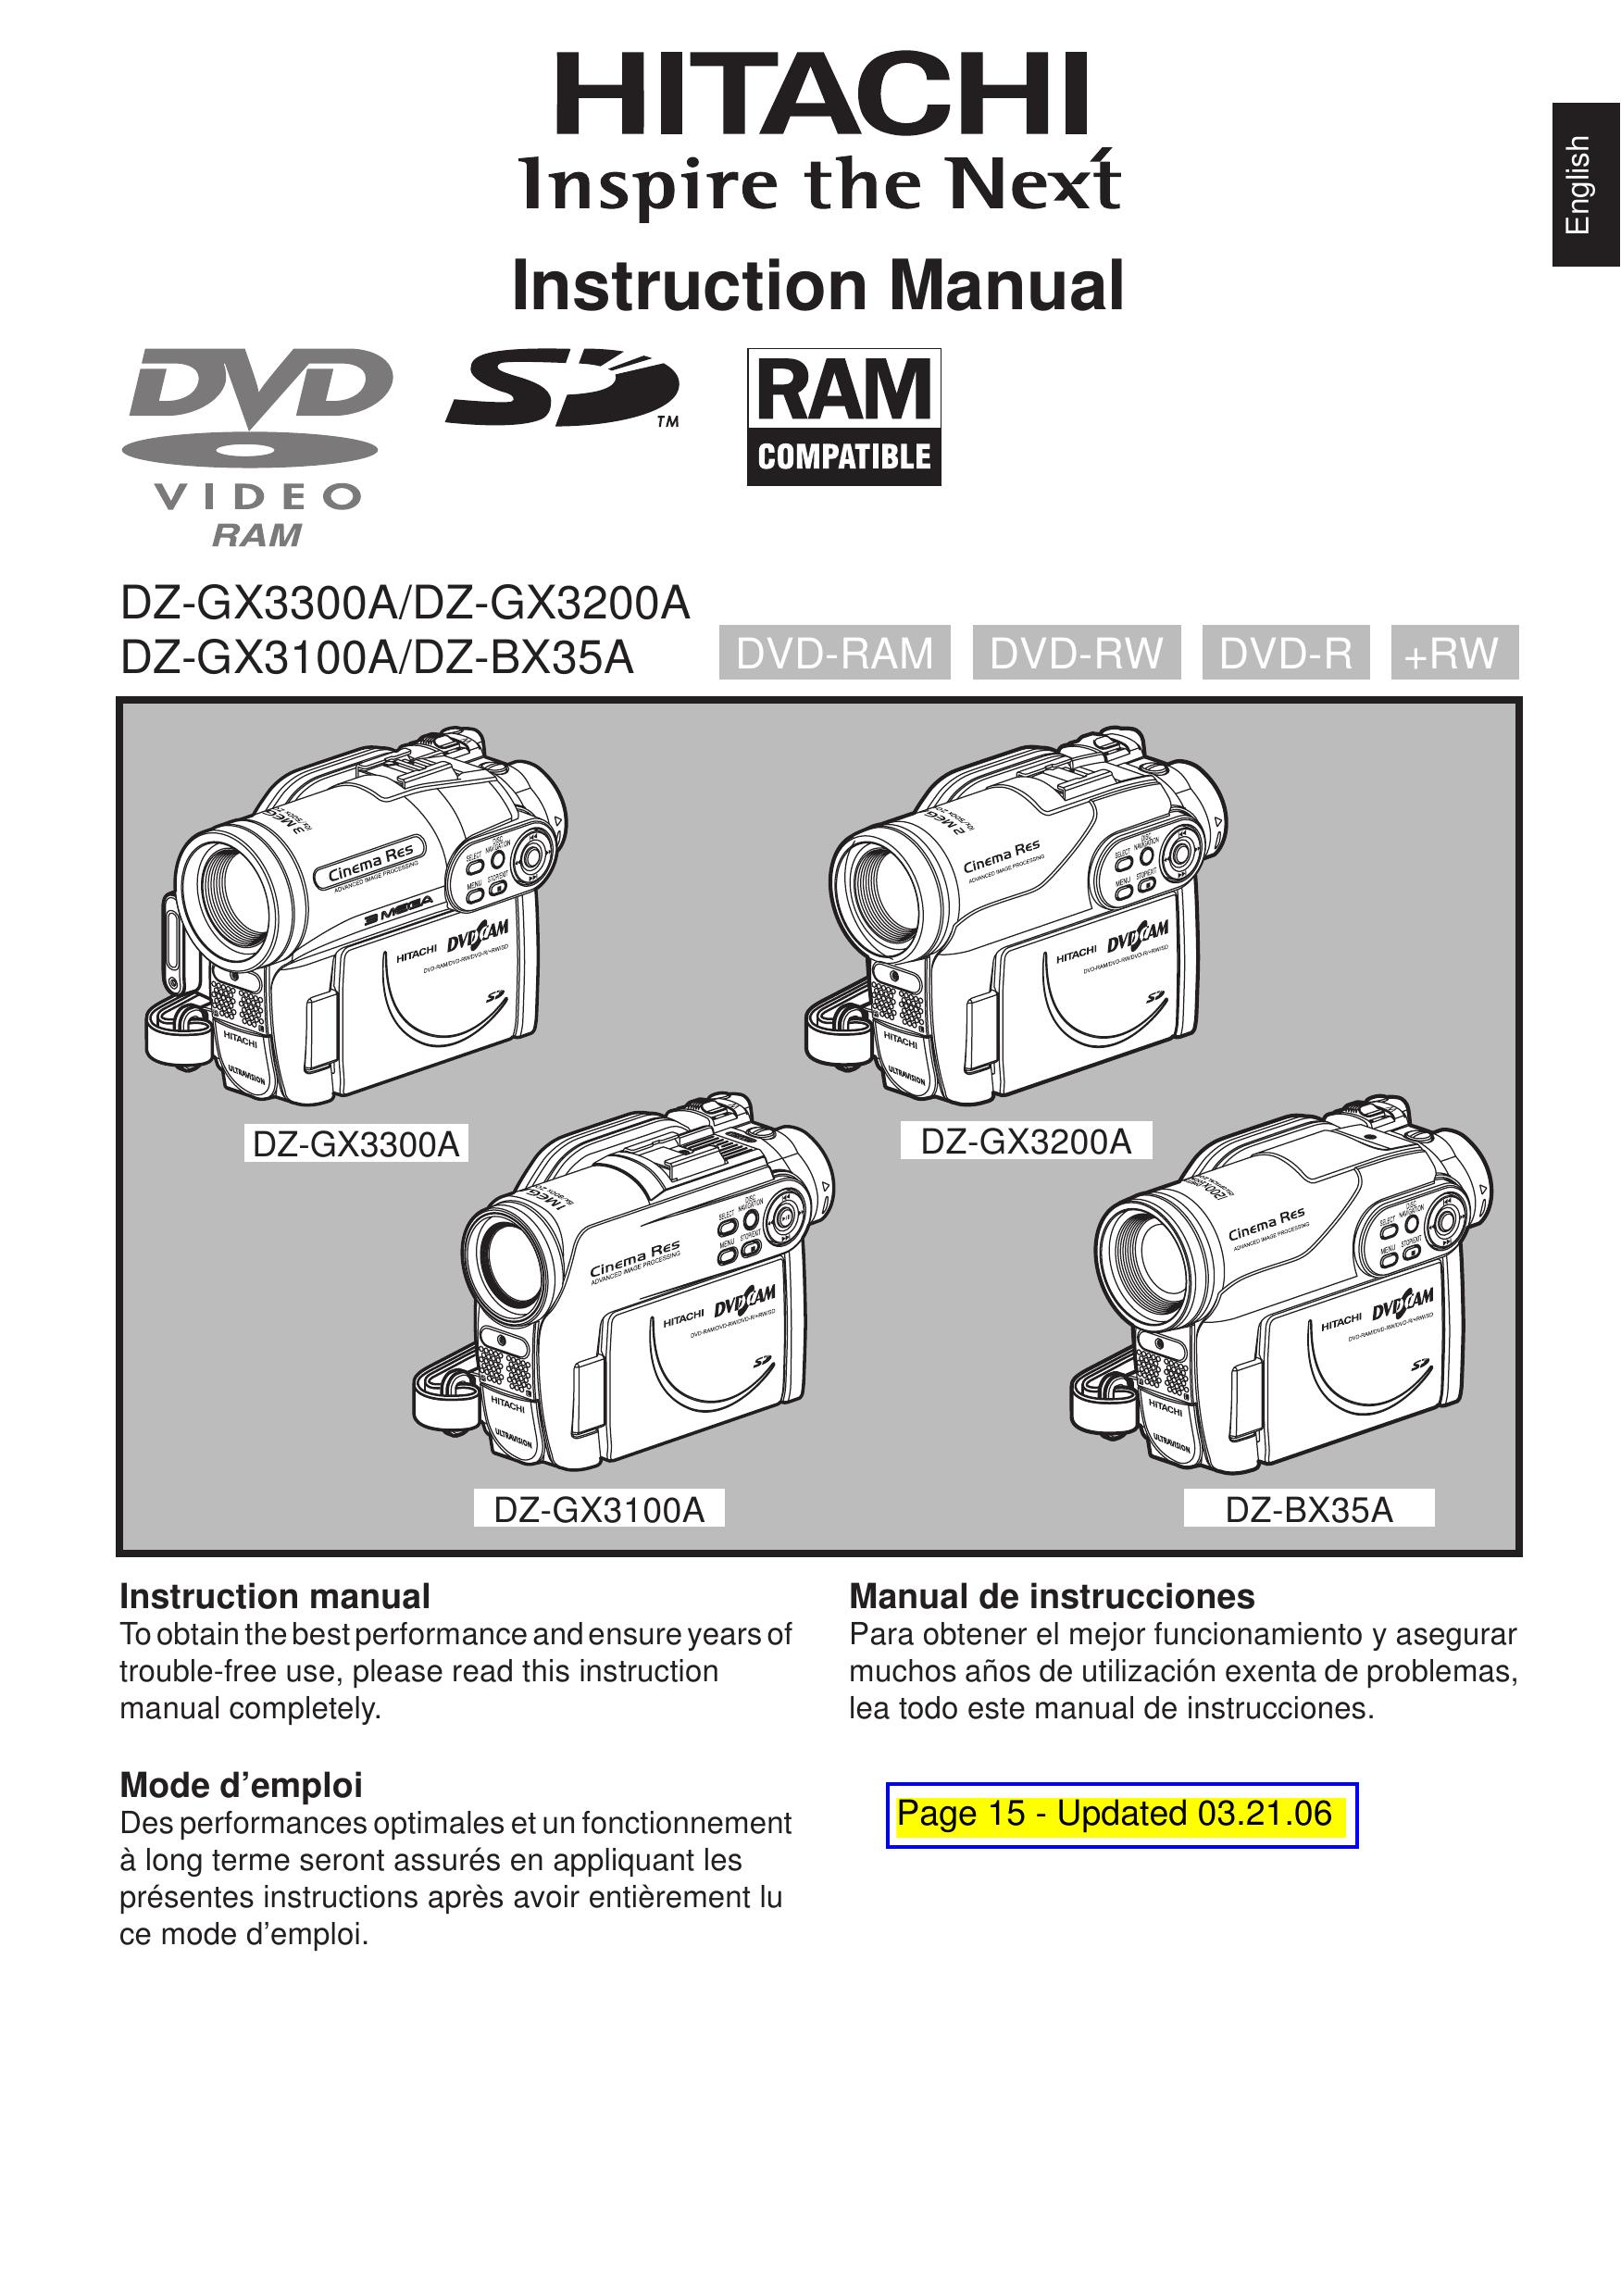 Hitachi DZBX35A Camcorder User Manual